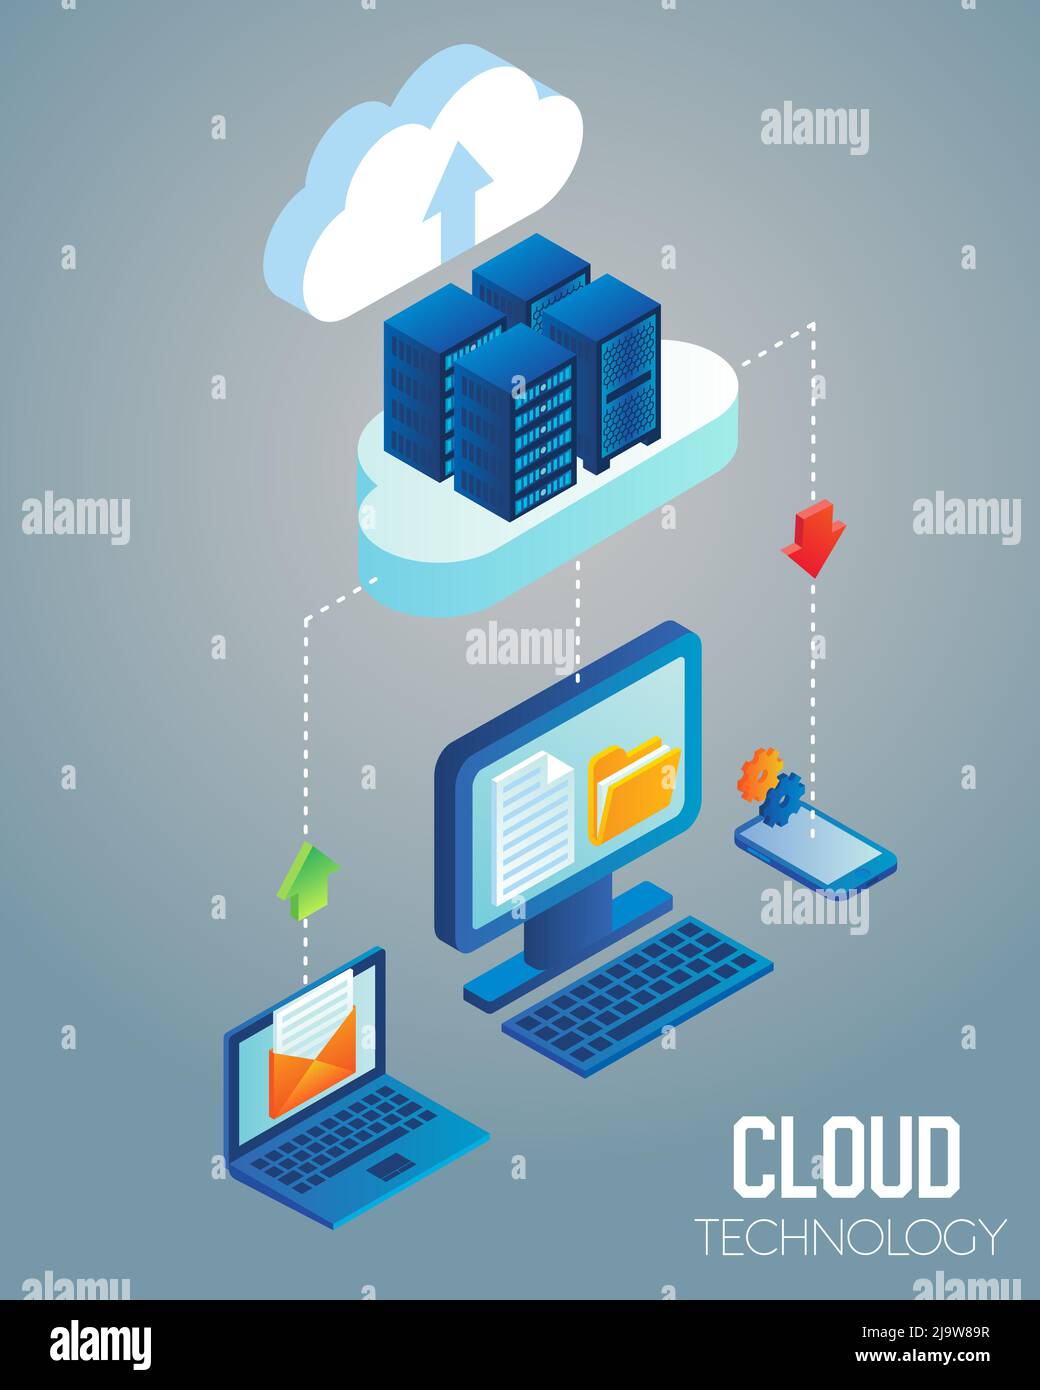 Cloud technology vector isometric illustration Stock Vector